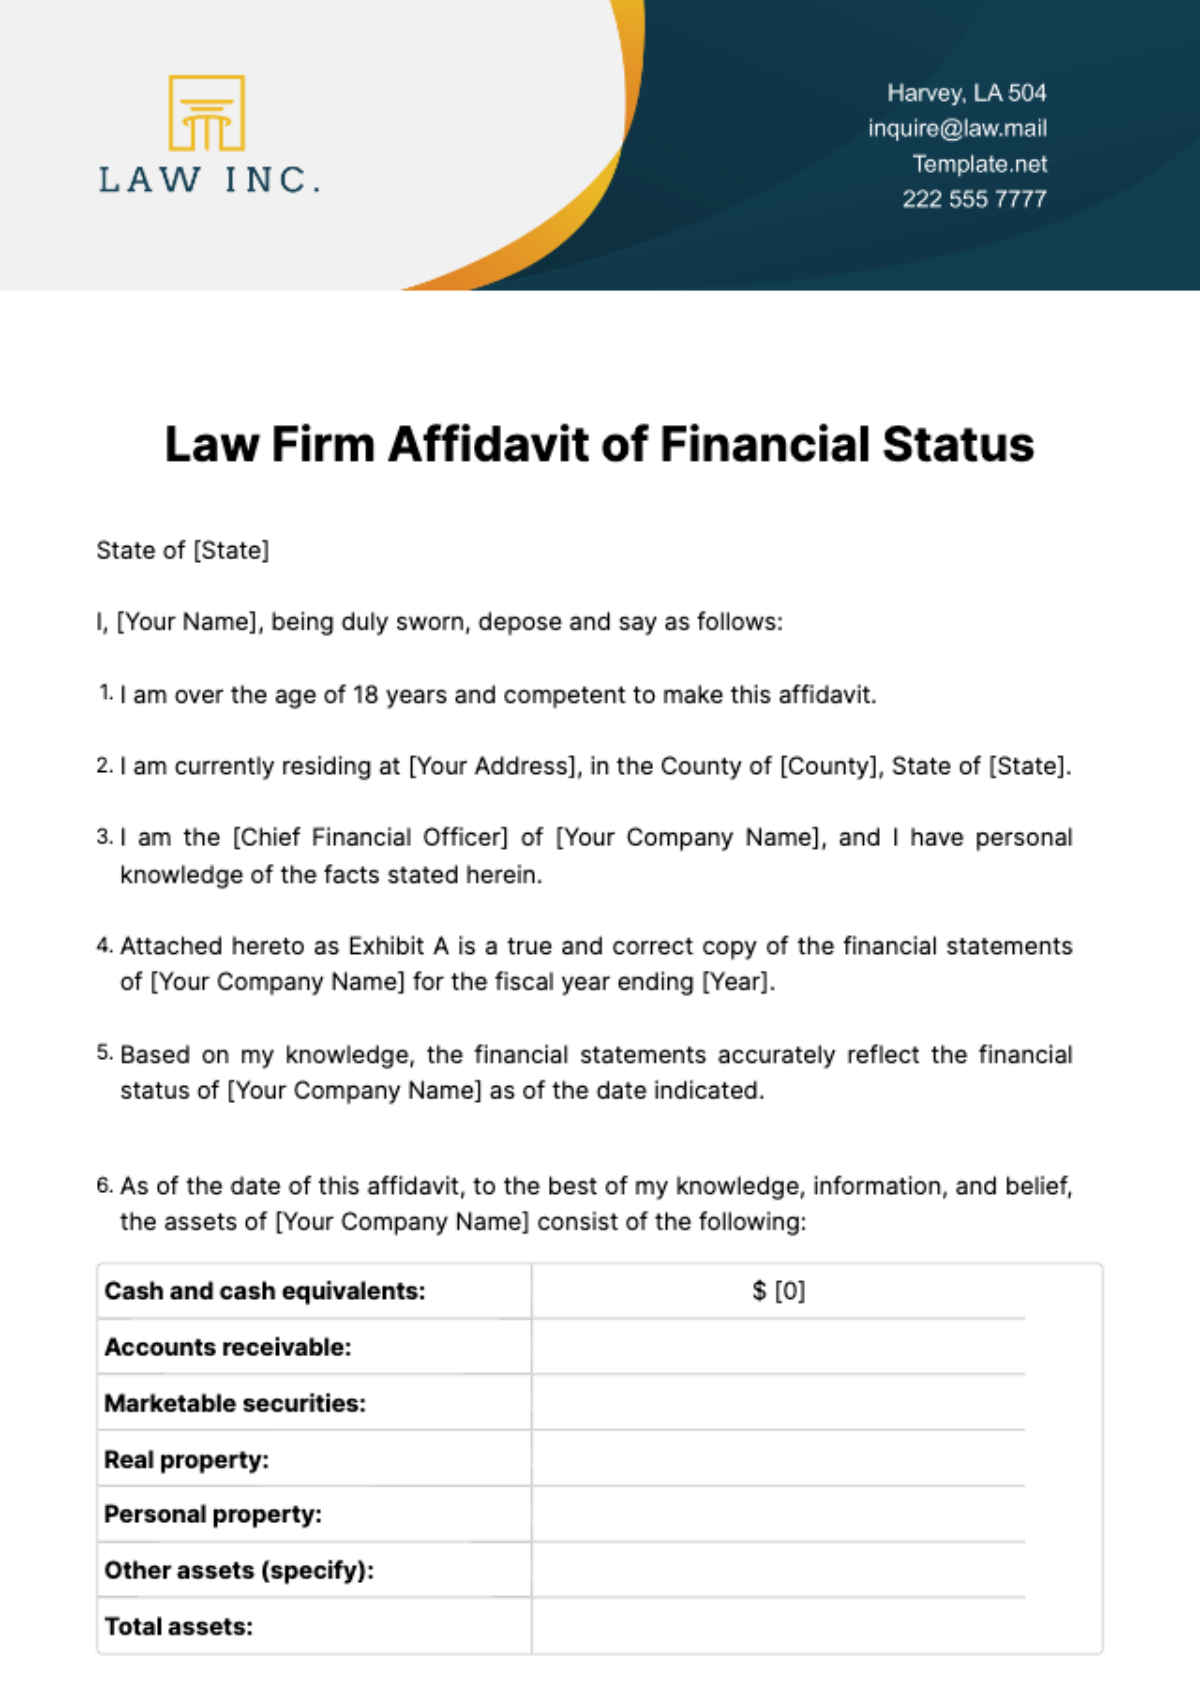 Law Firm Affidavit of Financial Status Template